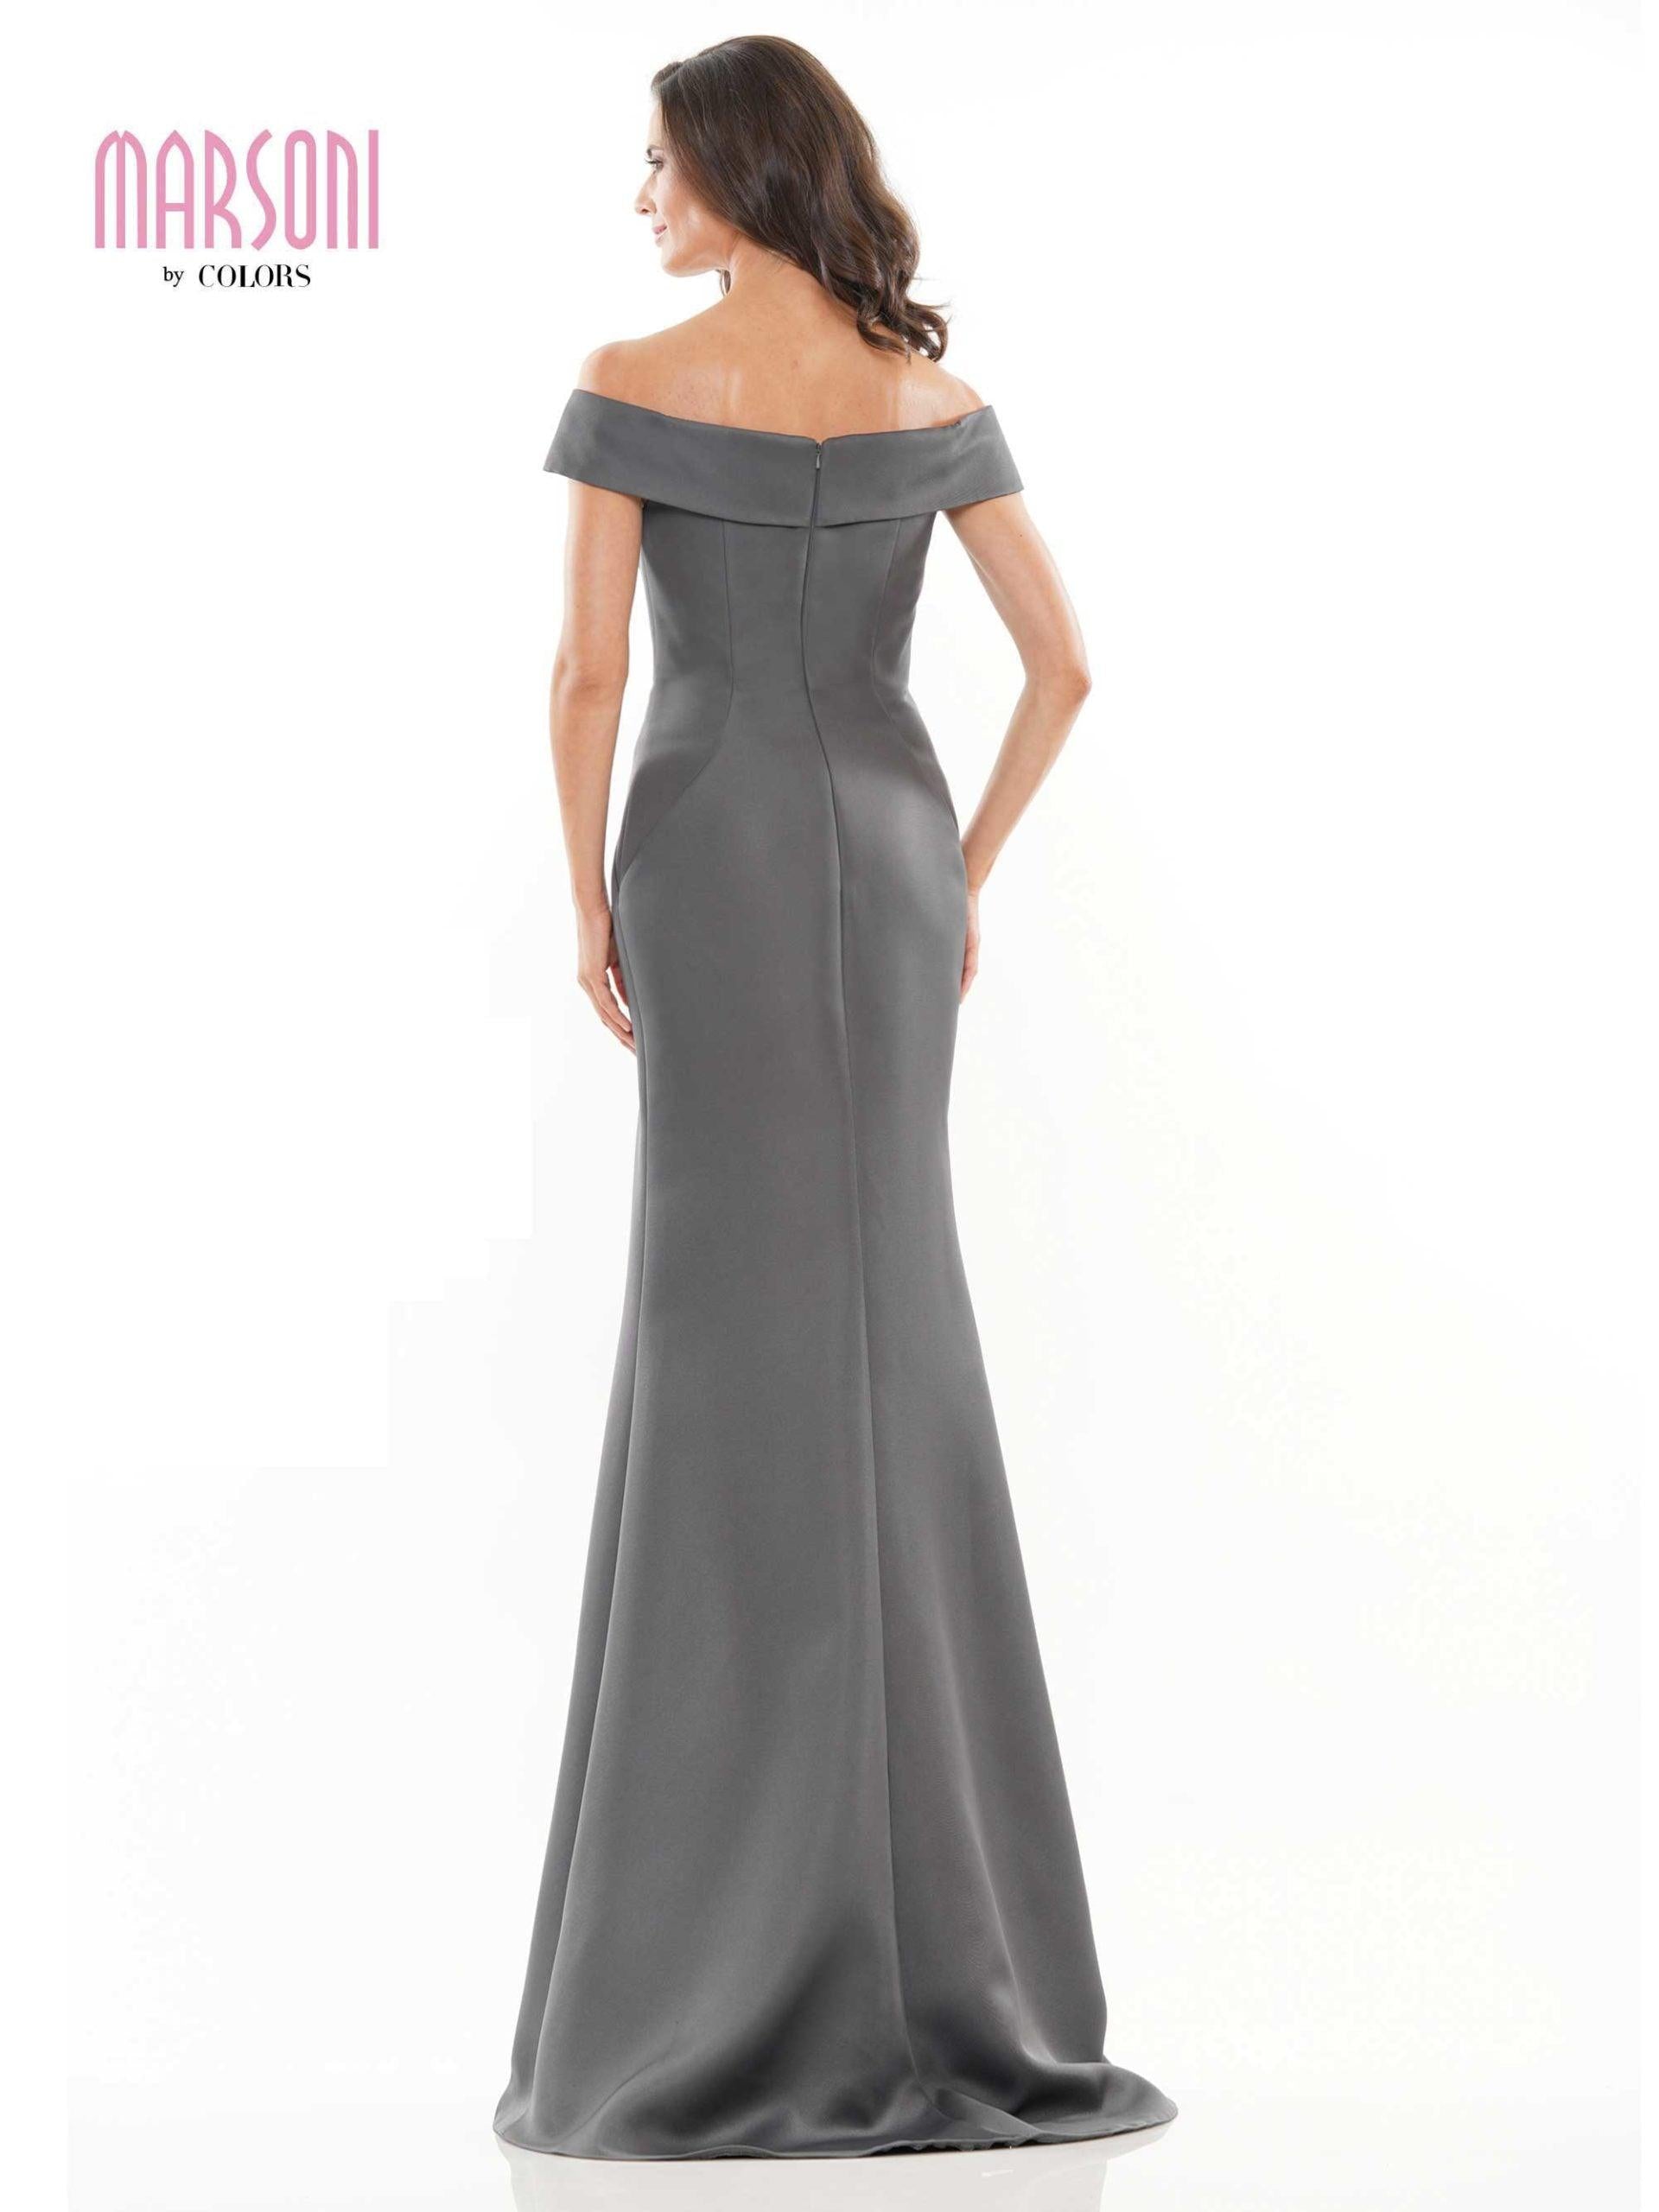 Marsoni Off Shoulder Satin Long Evening Gown 1153 - The Dress Outlet